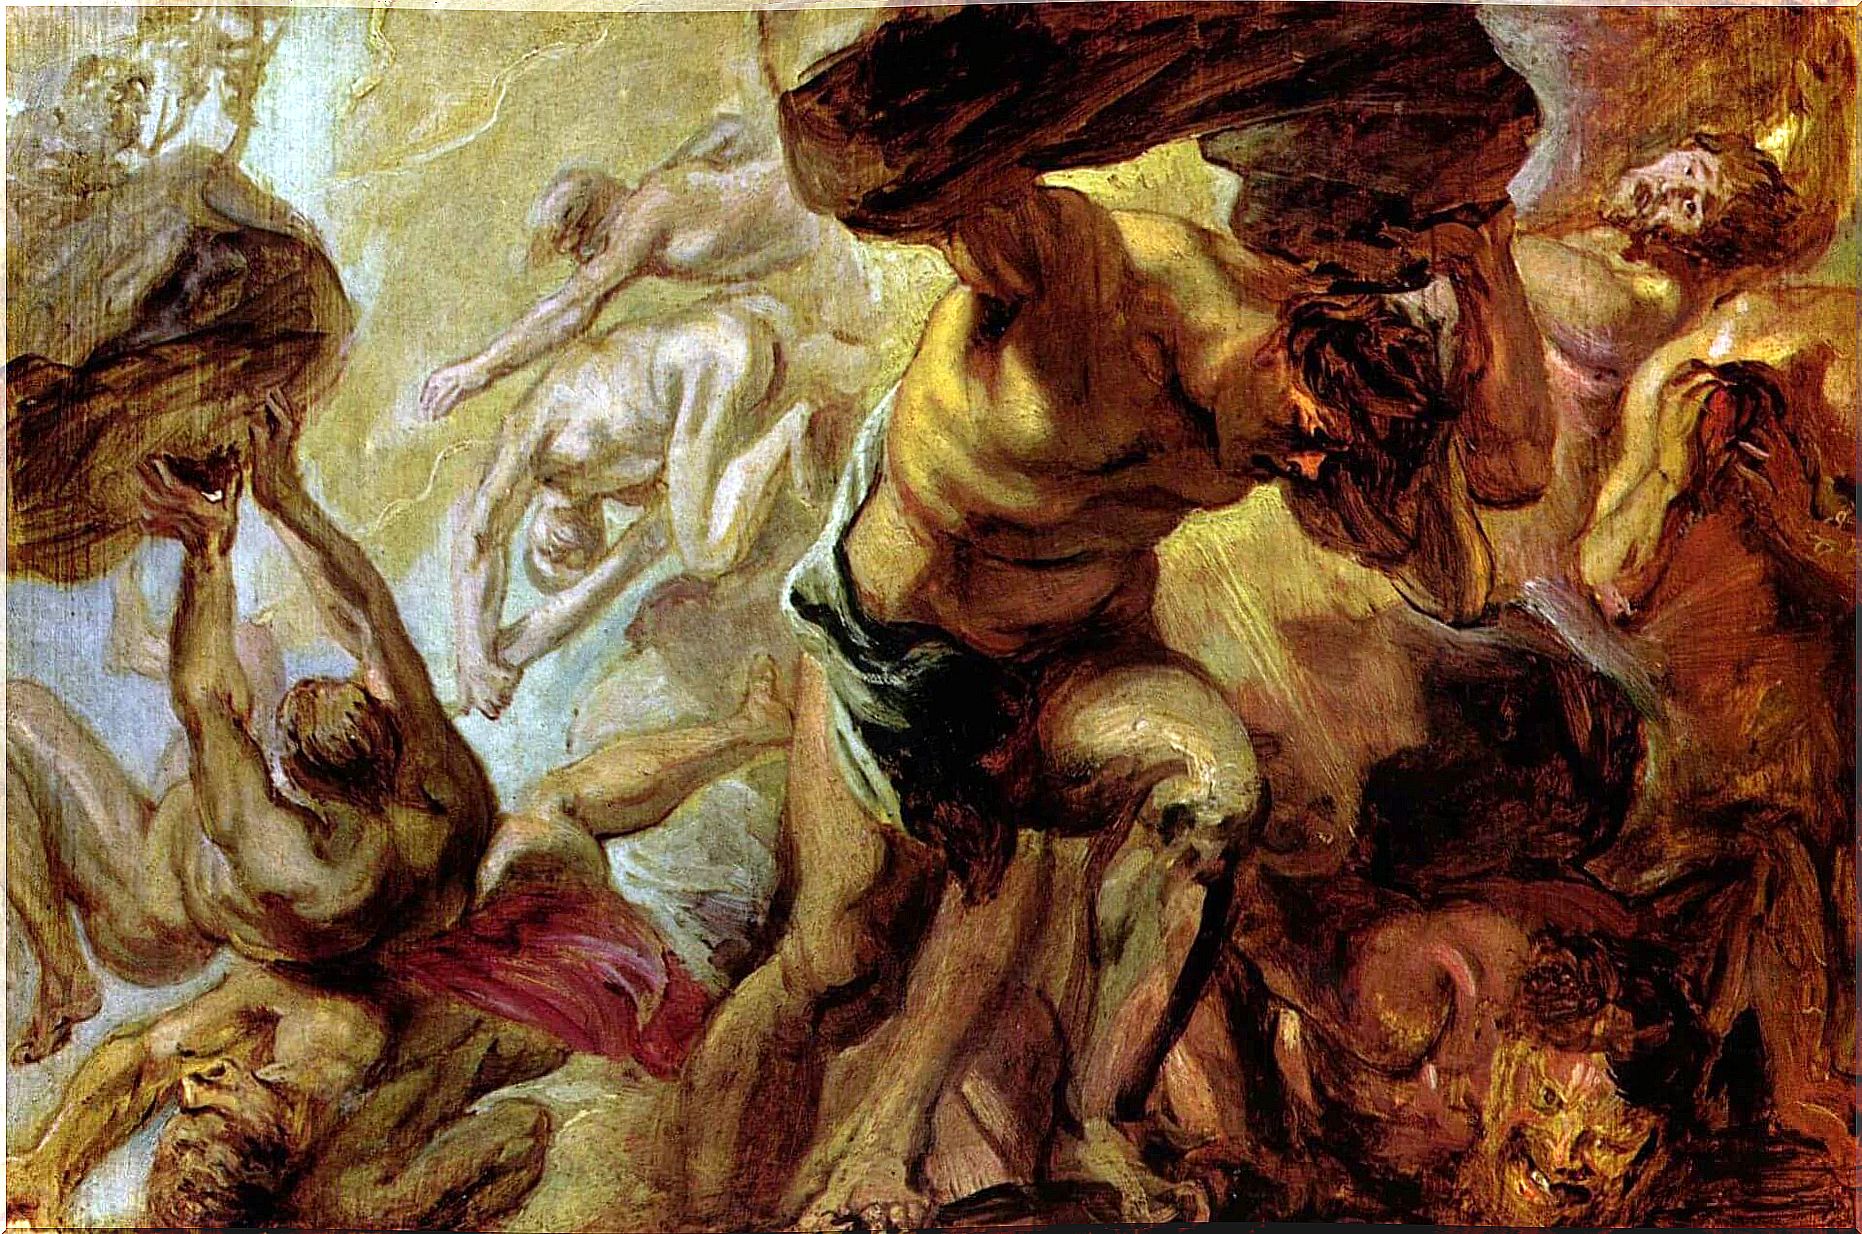 Rubens' Fall of the Titans